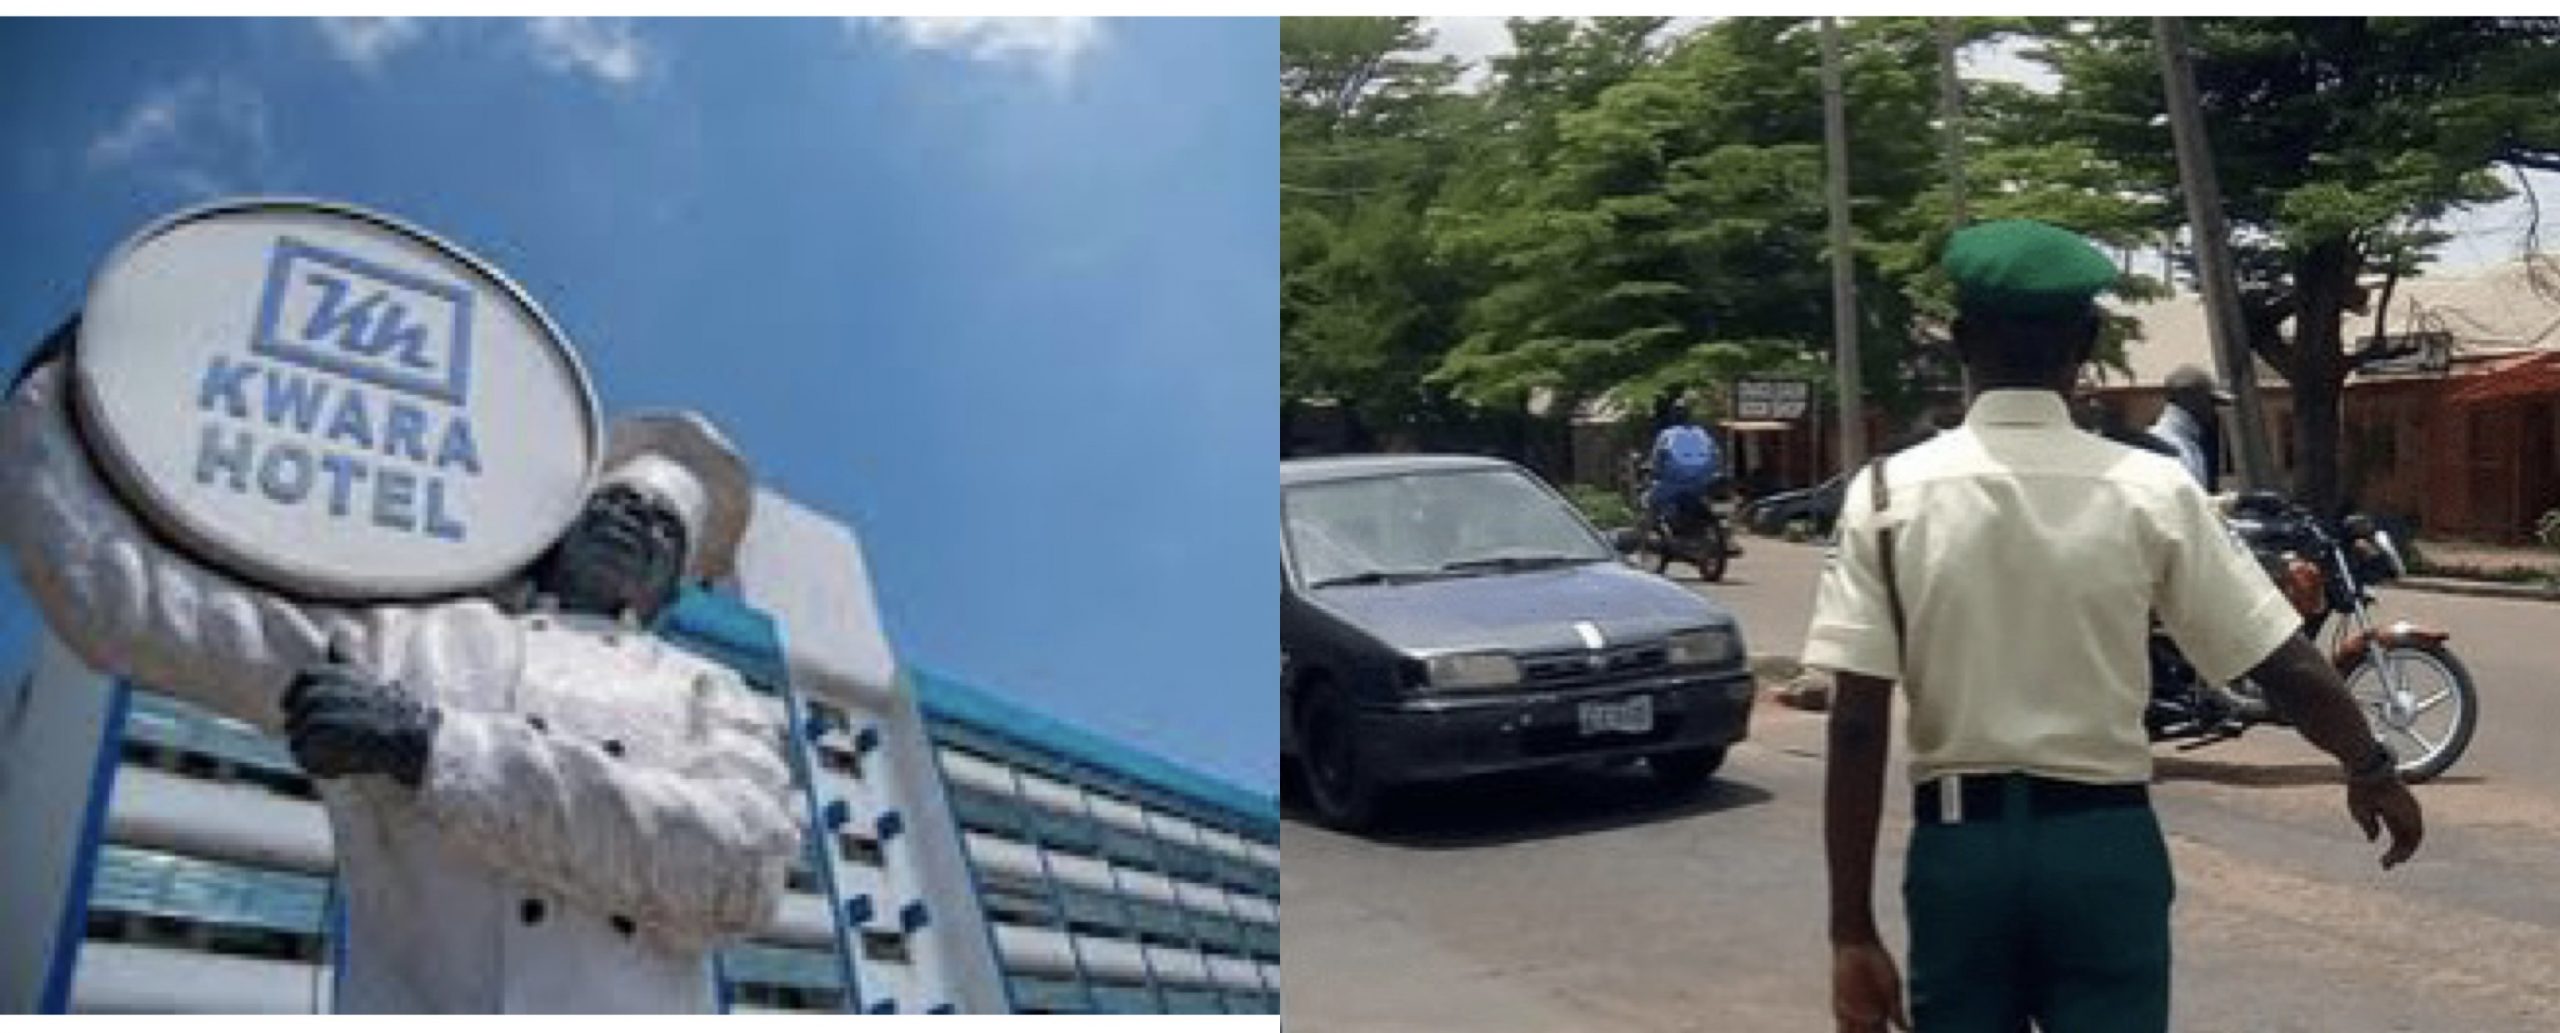 Kwara Hotel: Days After FI’s Report, Kwara Govt Sack Staff, Redeploy others to KWARTMA